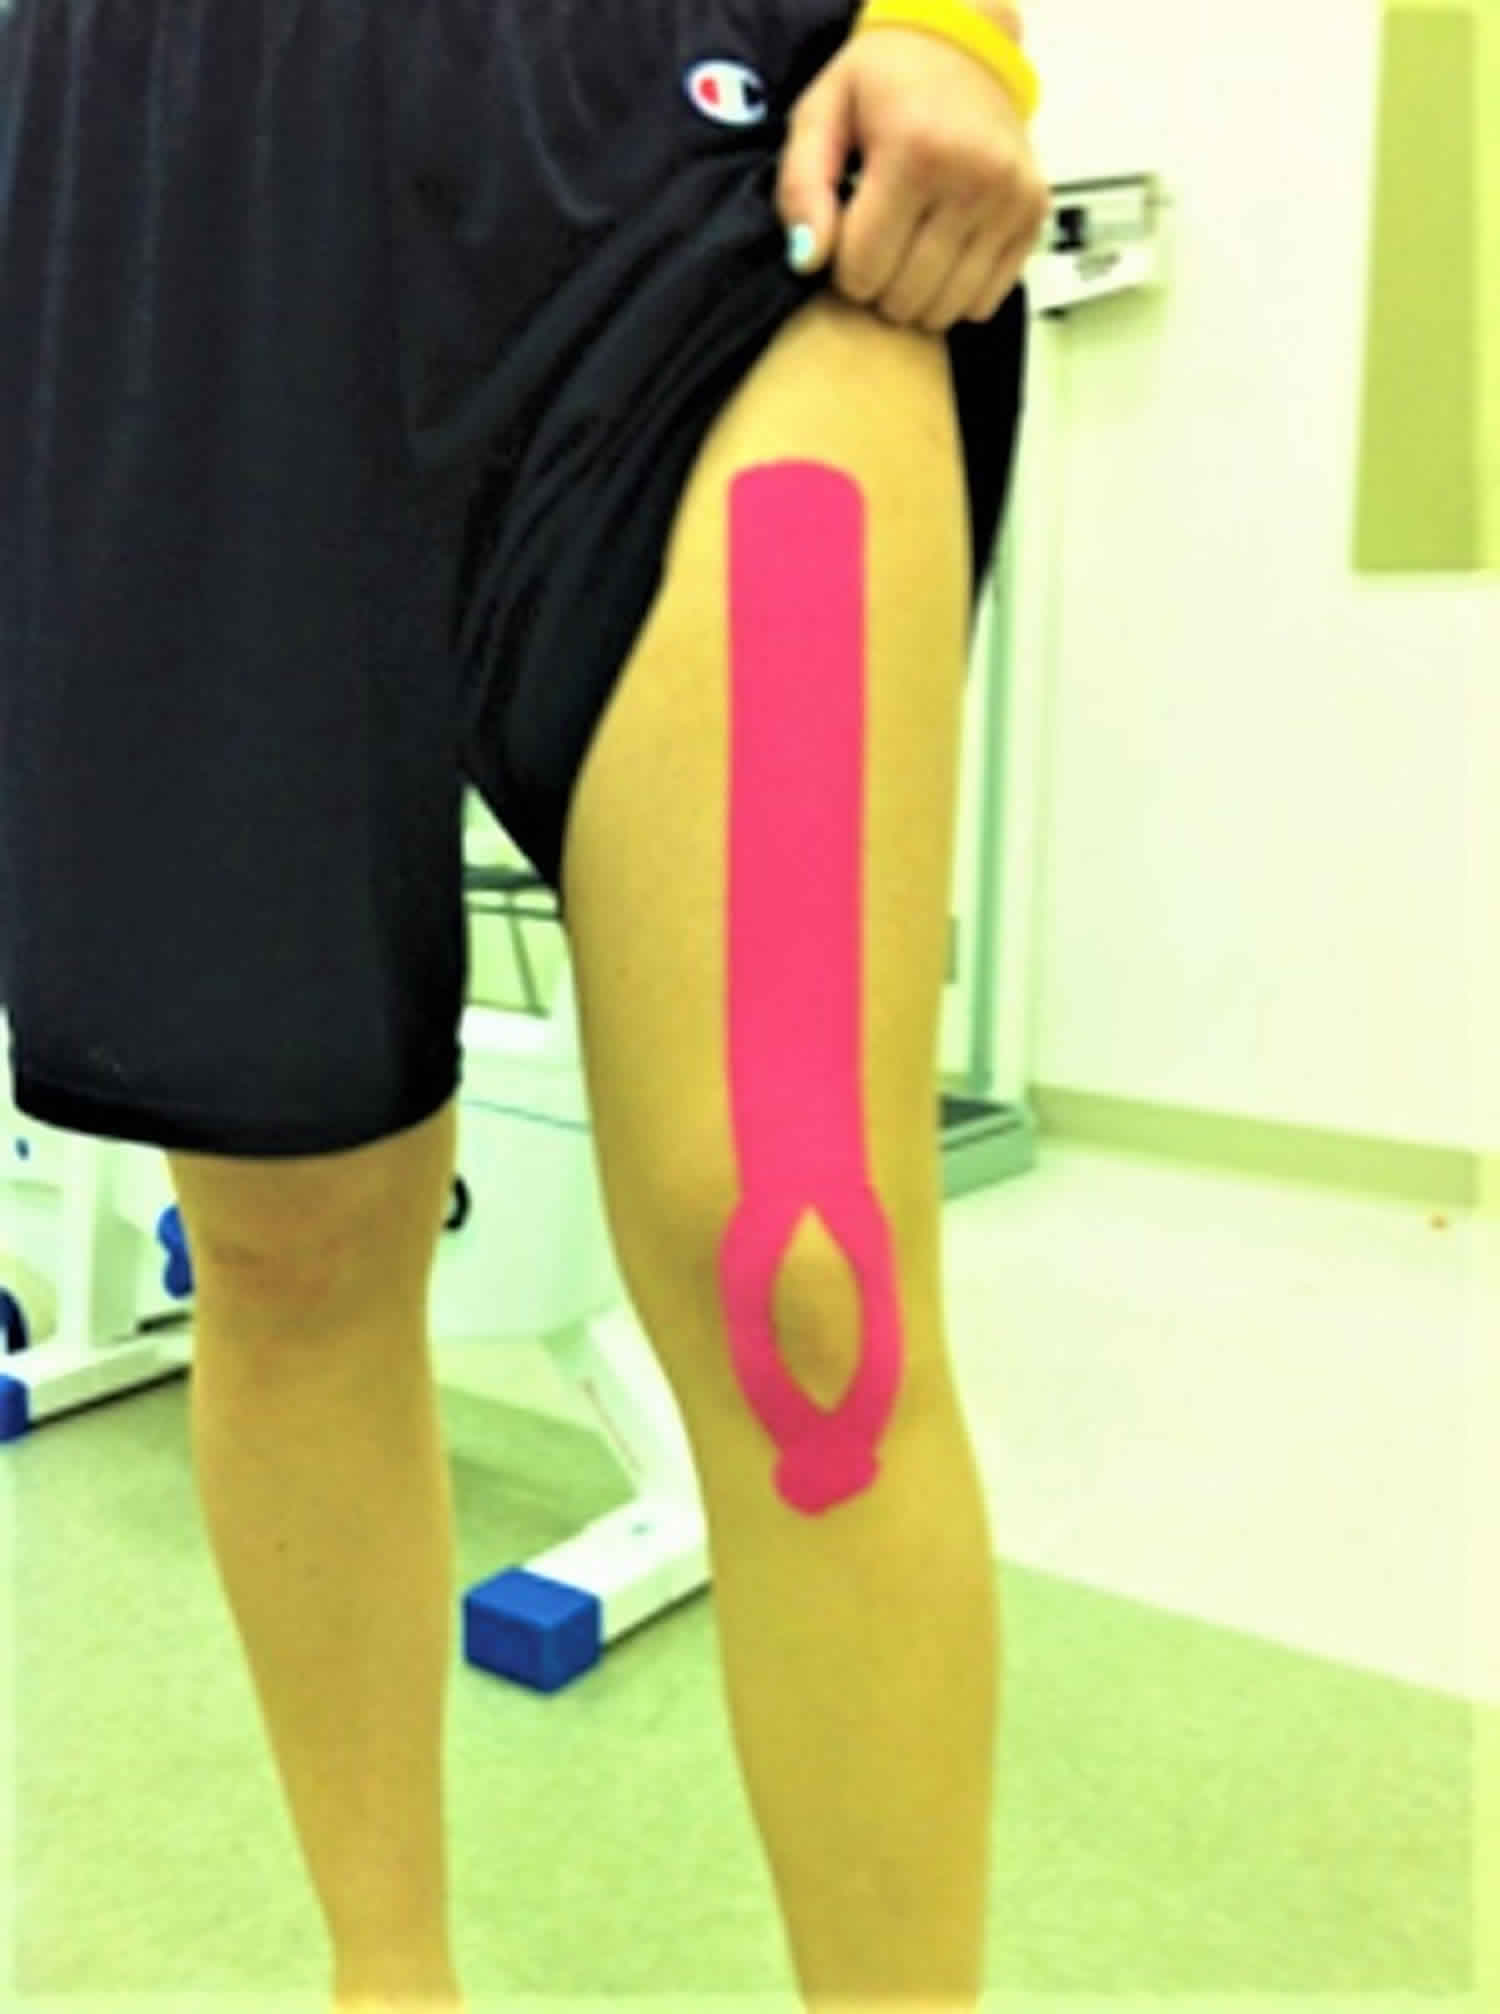 Kinesio tape for knee pain